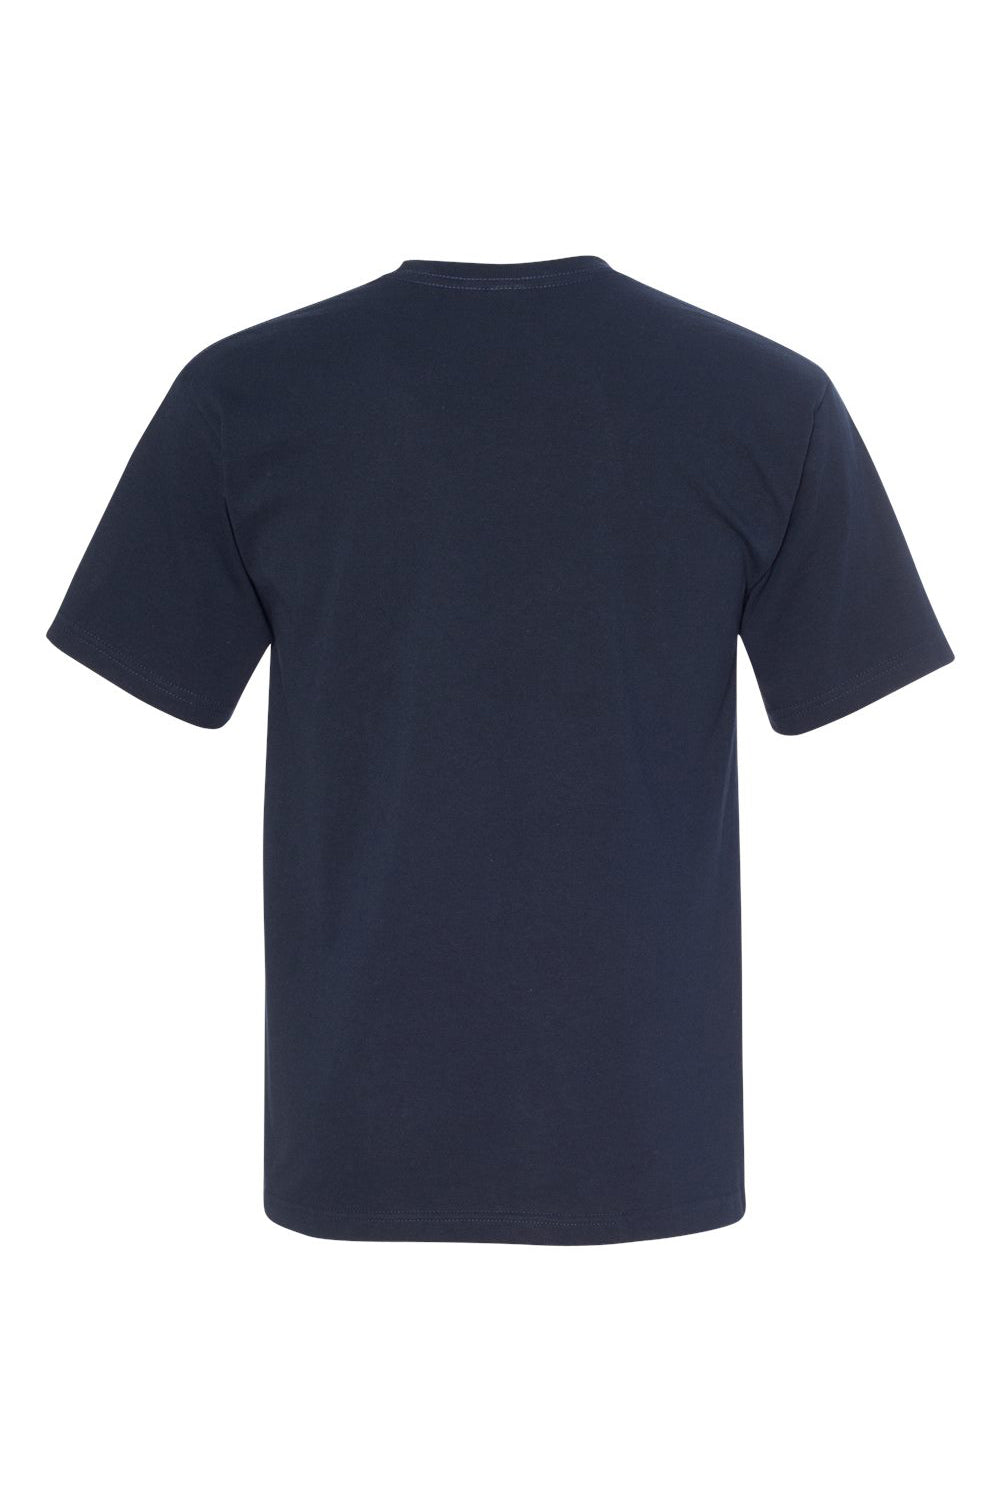 Bayside BA5040 Mens USA Made Short Sleeve Crewneck T-Shirt Dark Navy Blue Flat Back